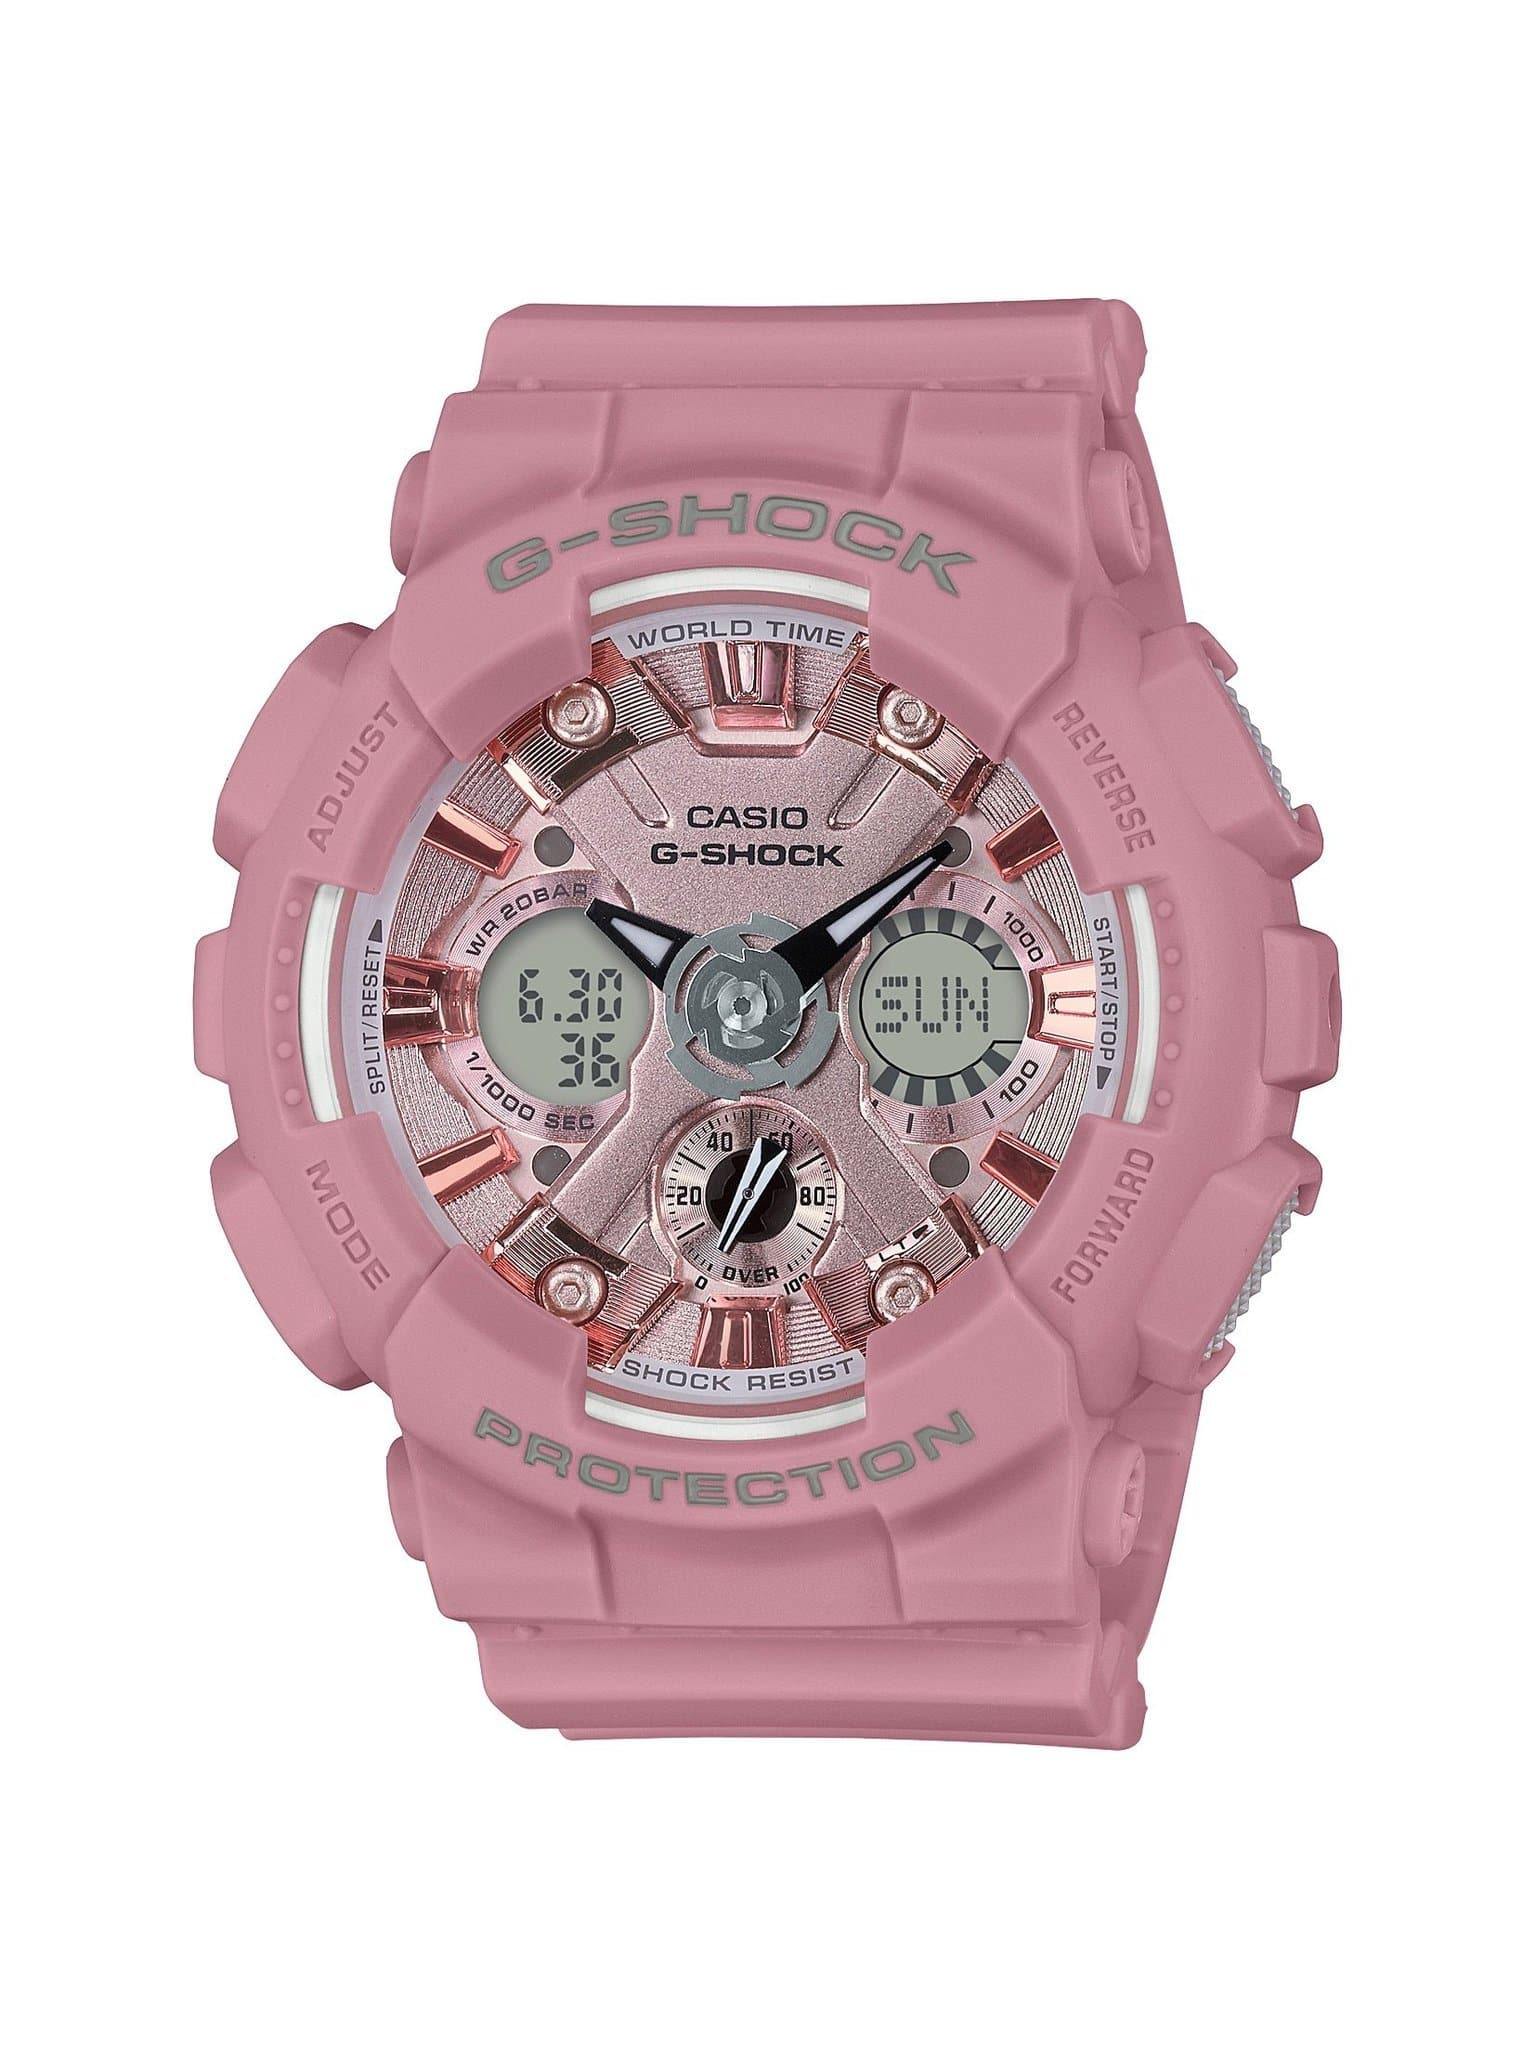 Casio G-Shock Sneaker S Series Anadigi Pastel Pink Ladies' Watch GMAS120DP-4ADR - Prestige